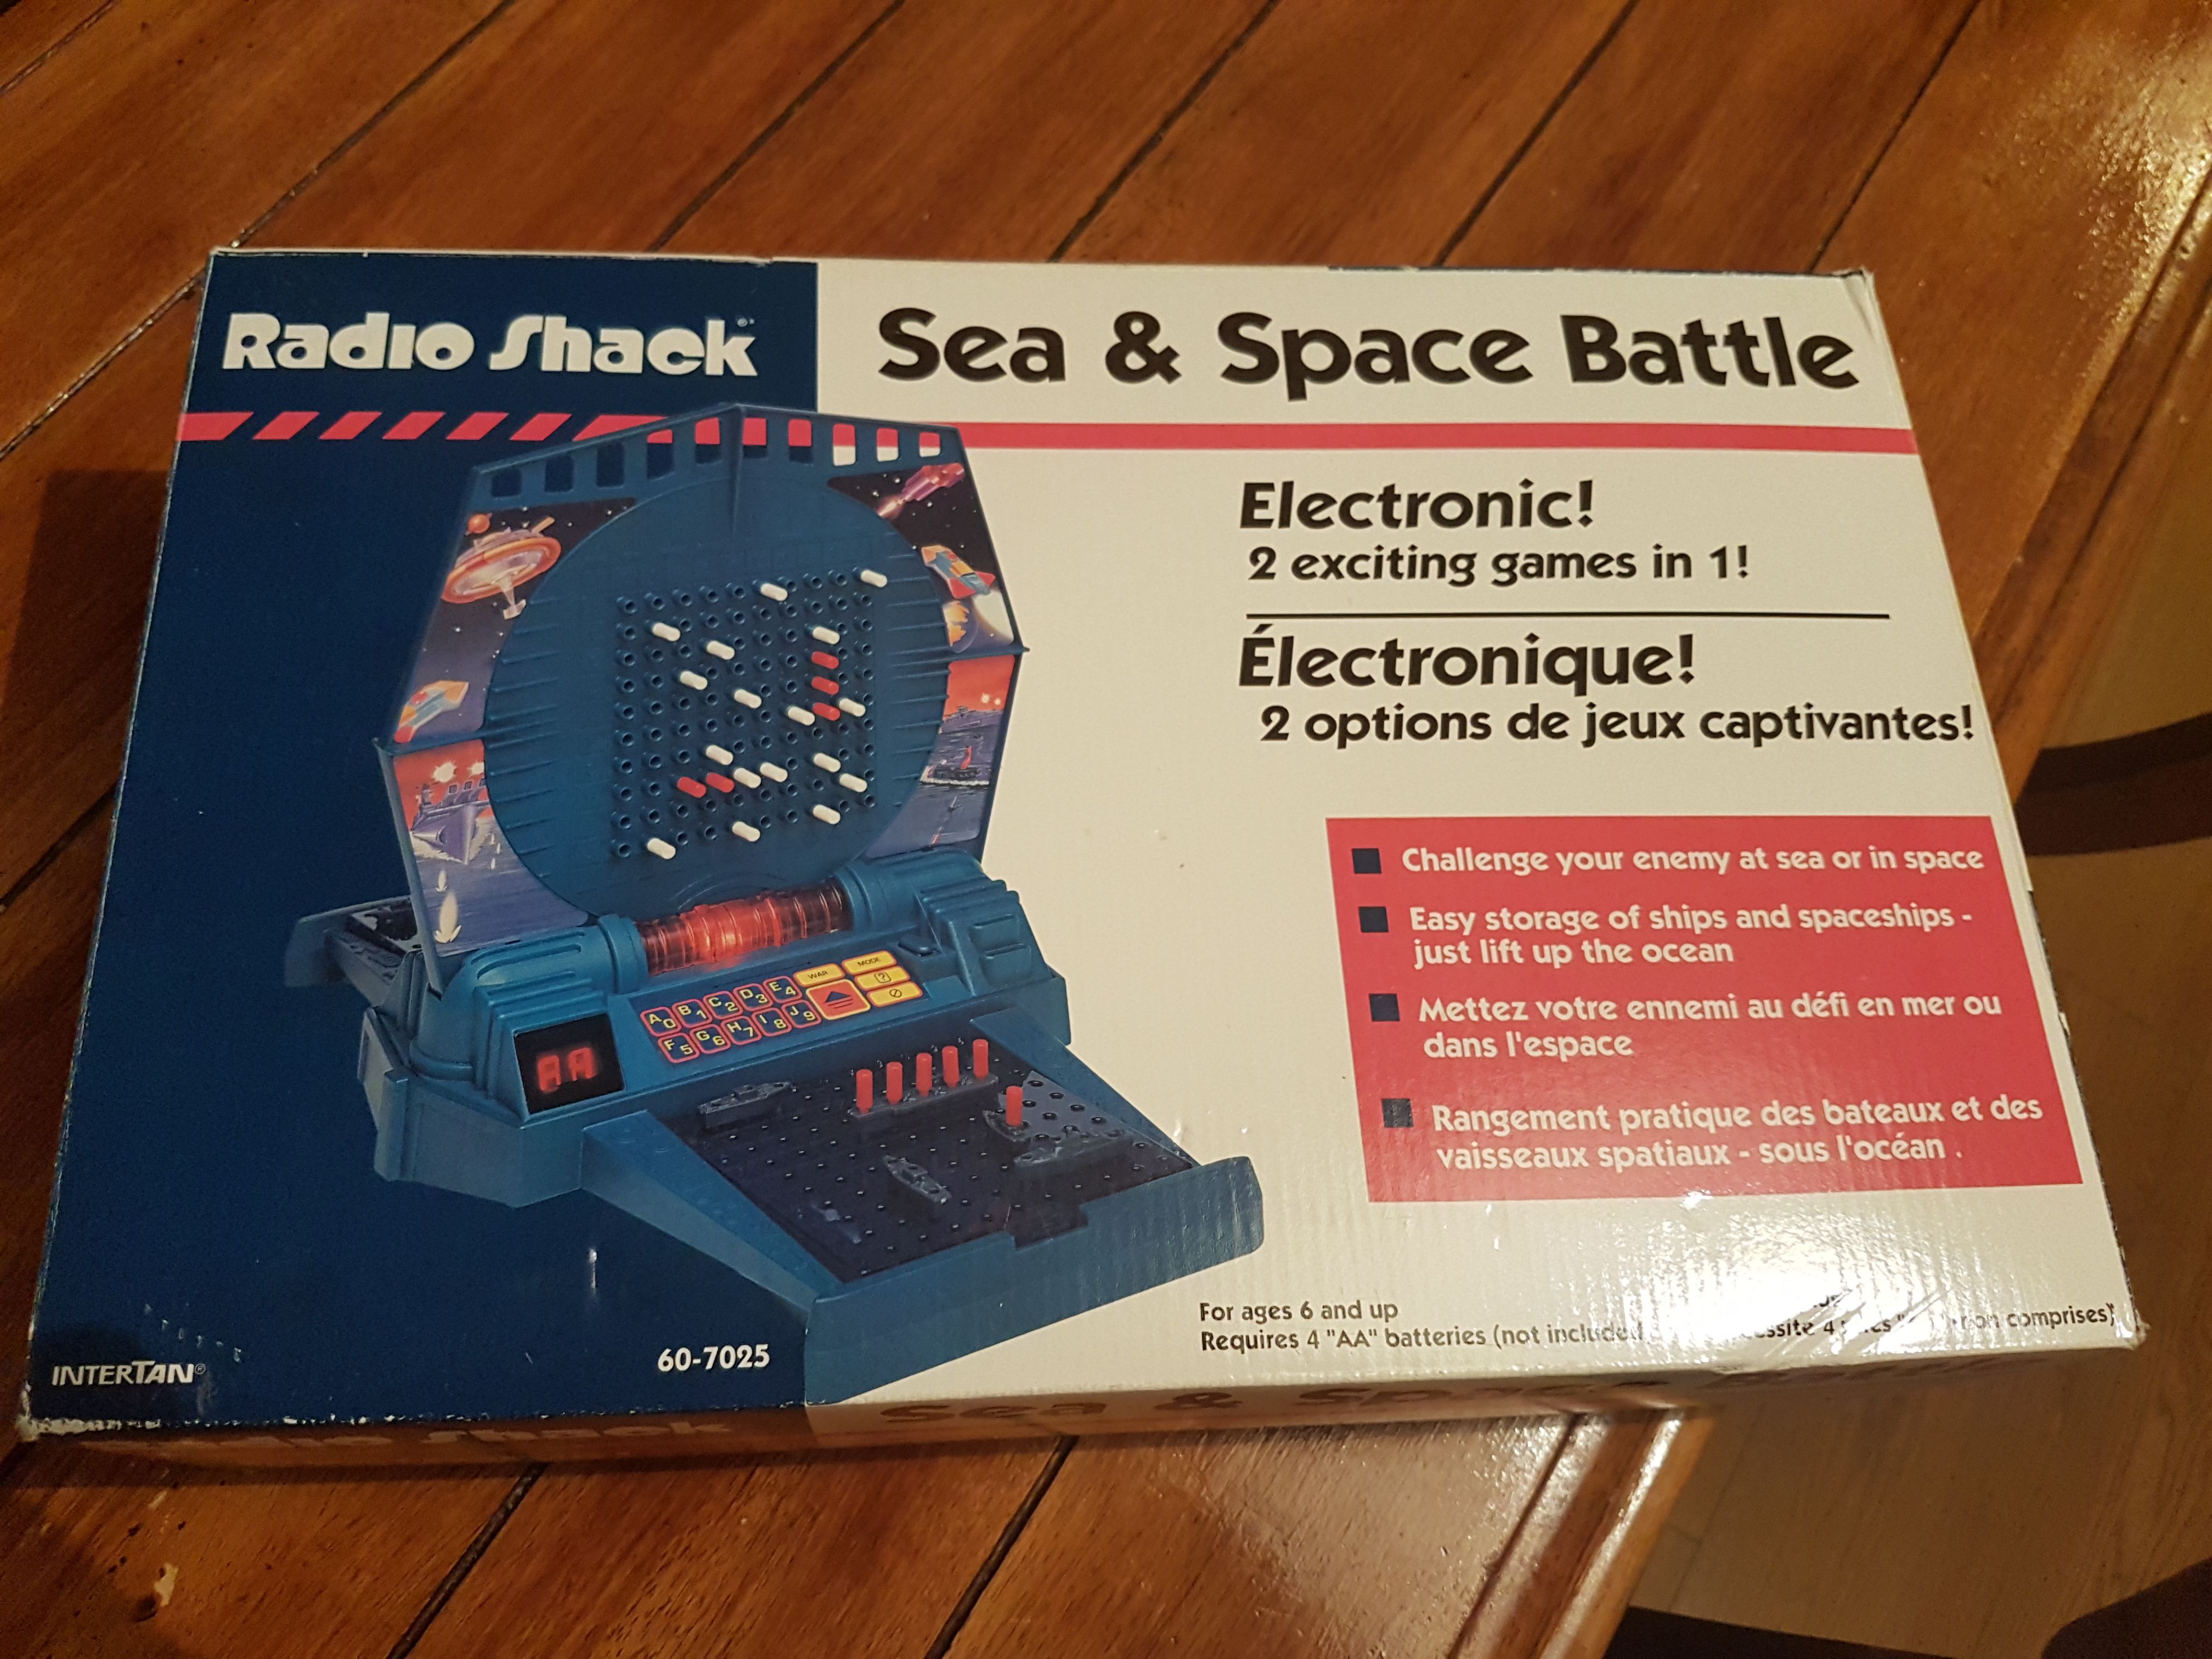 Space & Sea Battle